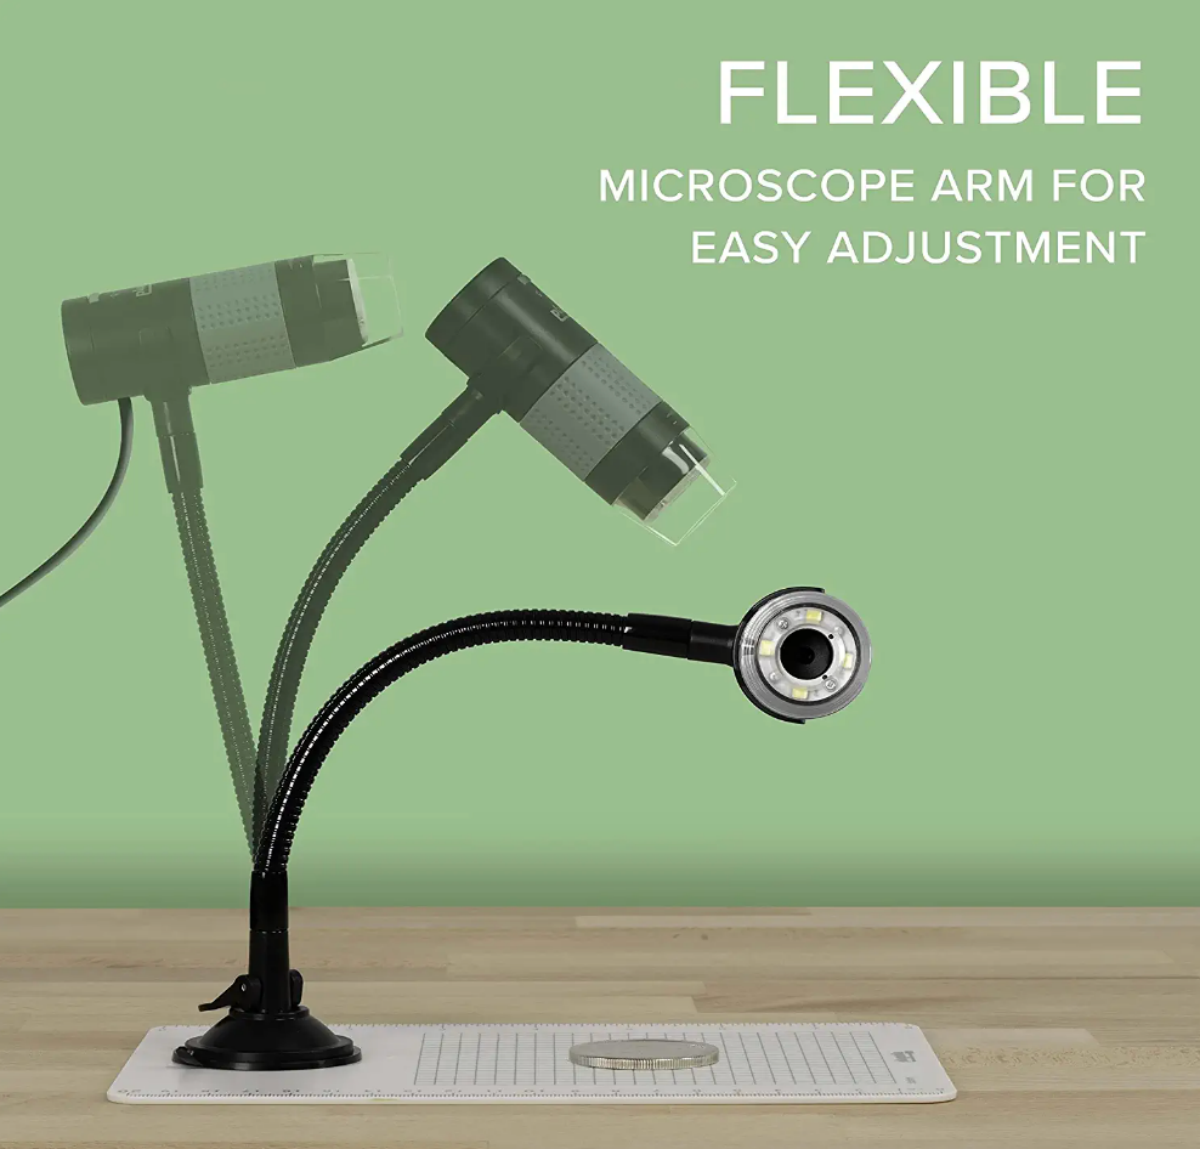 An image illustrating the flexibility of the Plugable Digital USB Microscope arm